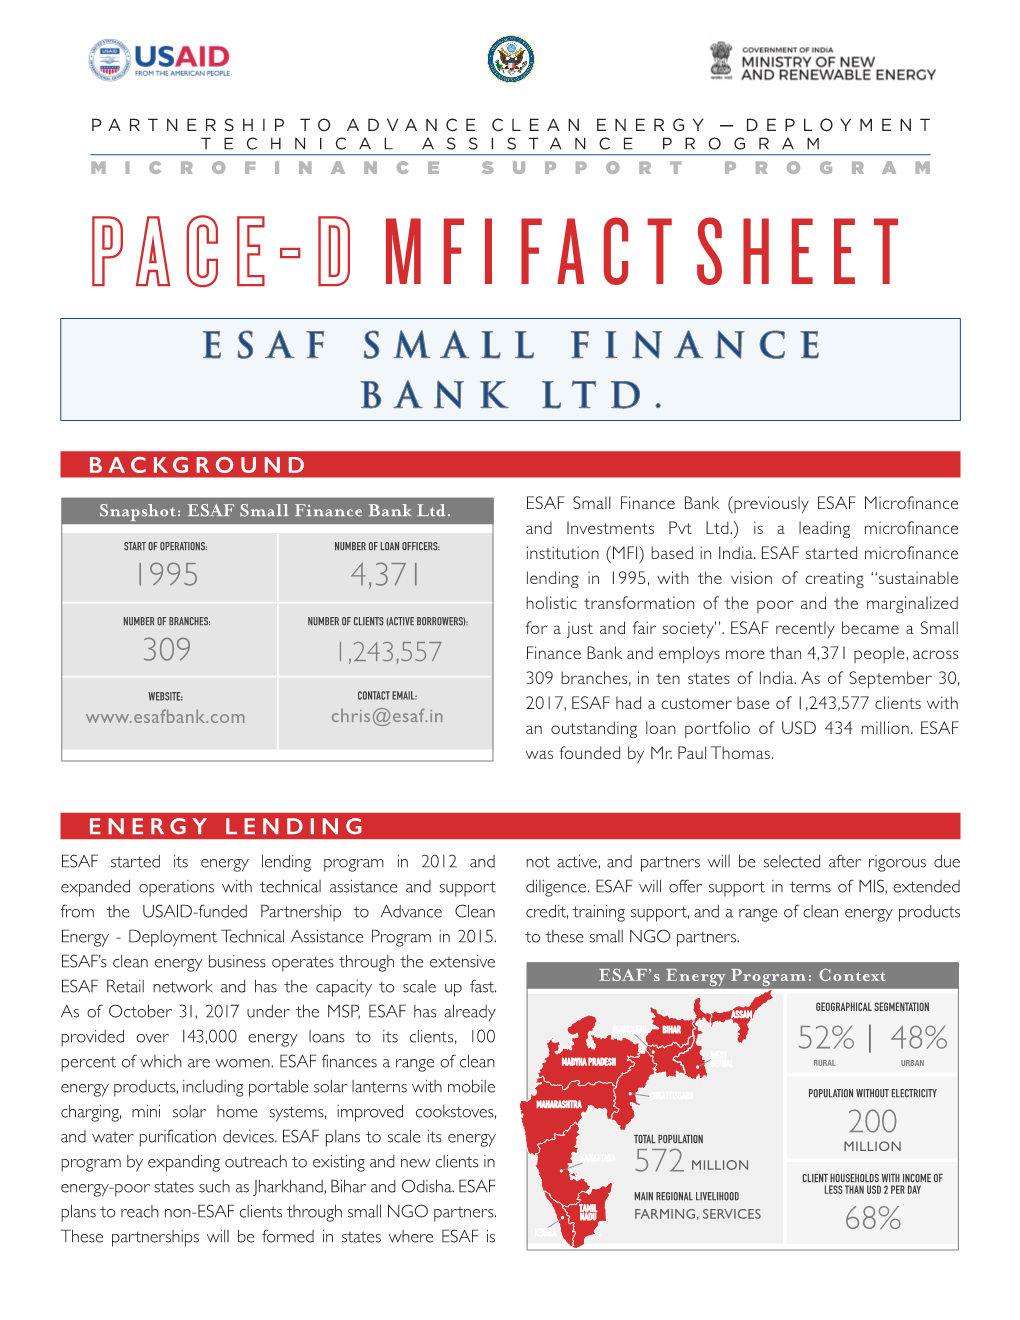 PACE-D MFI Fact Sheet- ESAF